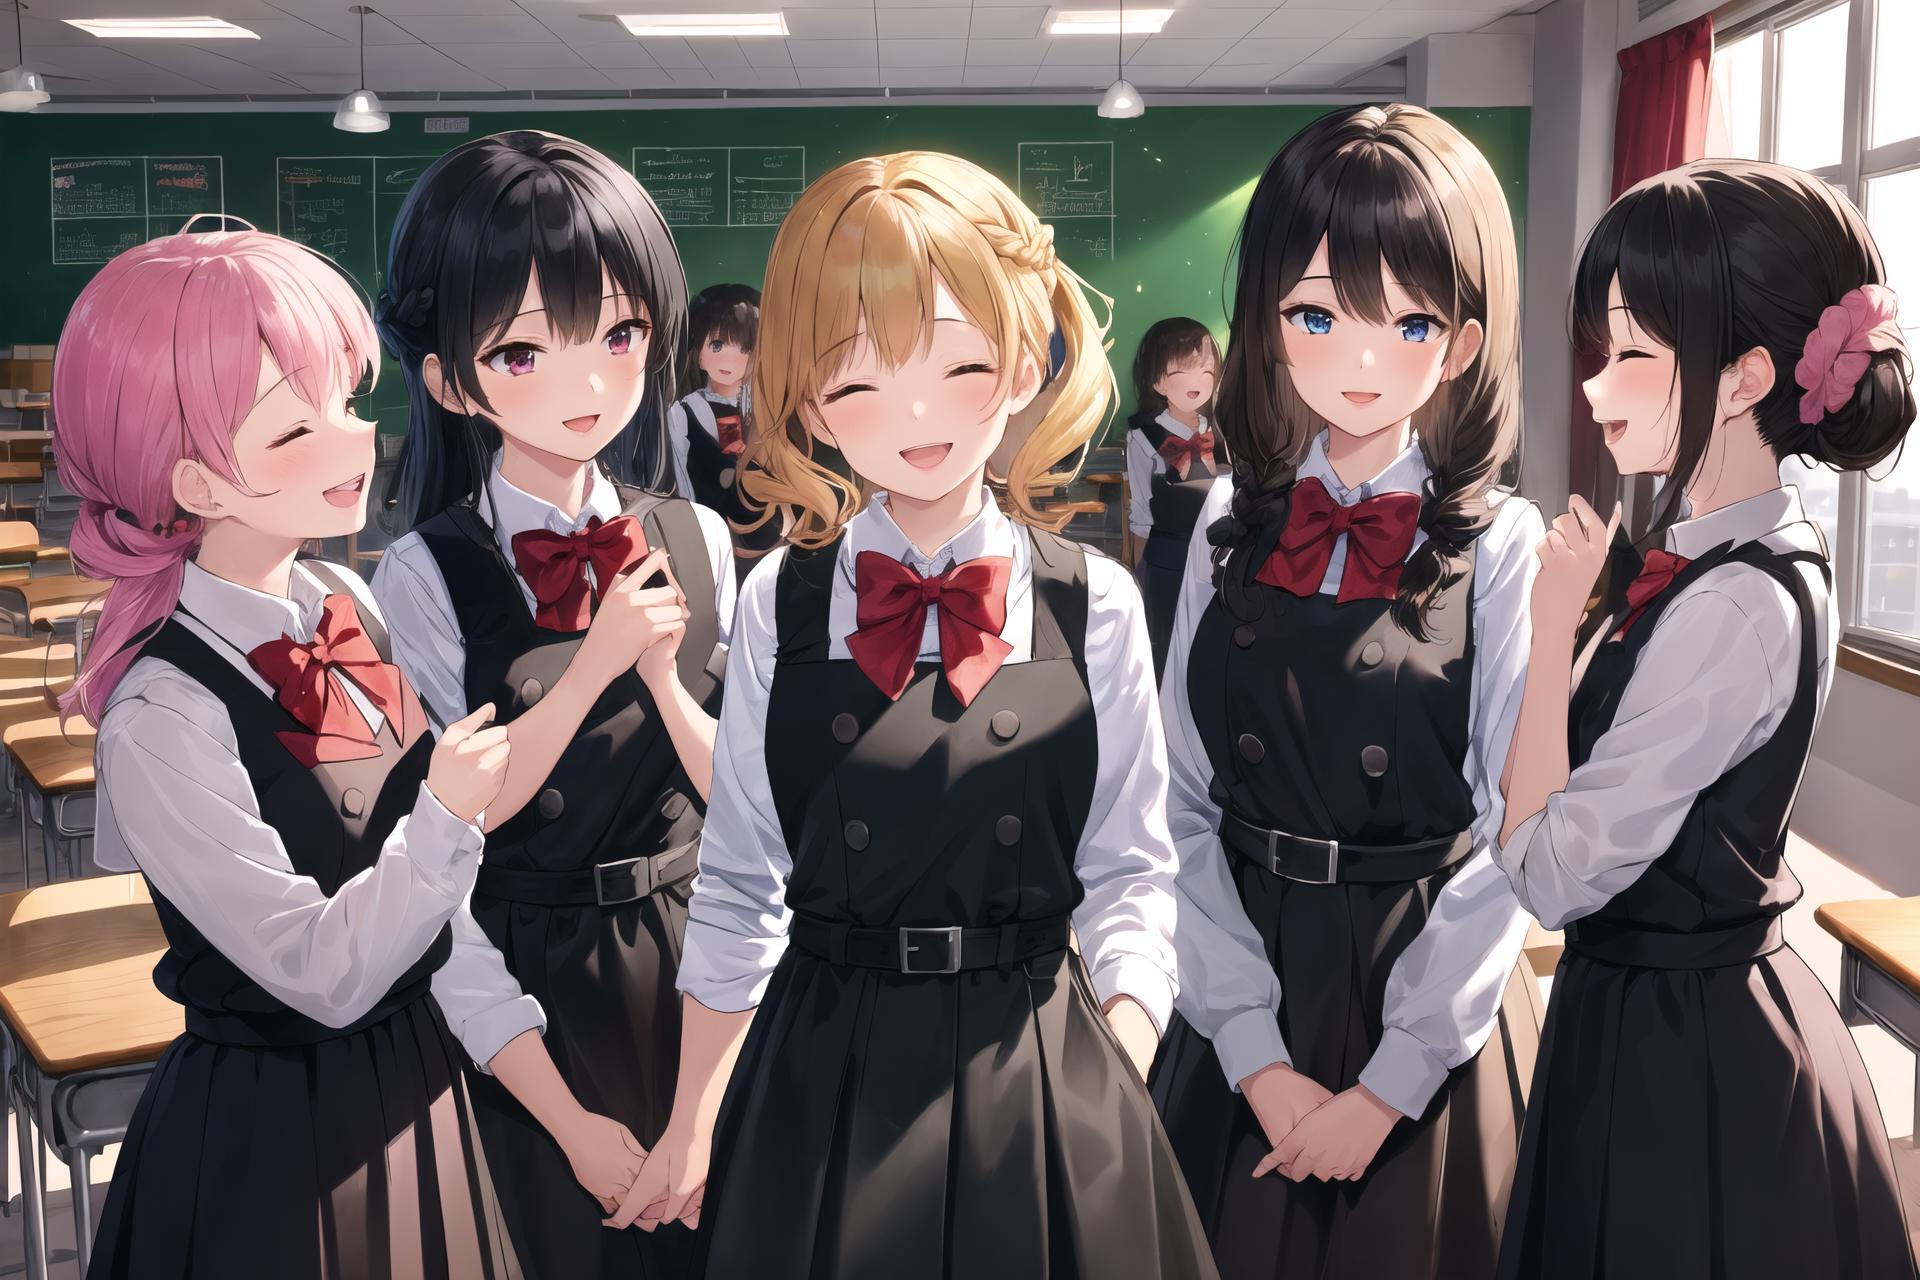 Scared Girl School Anime Uniform On Stock Photo 1466949833 | Shutterstock